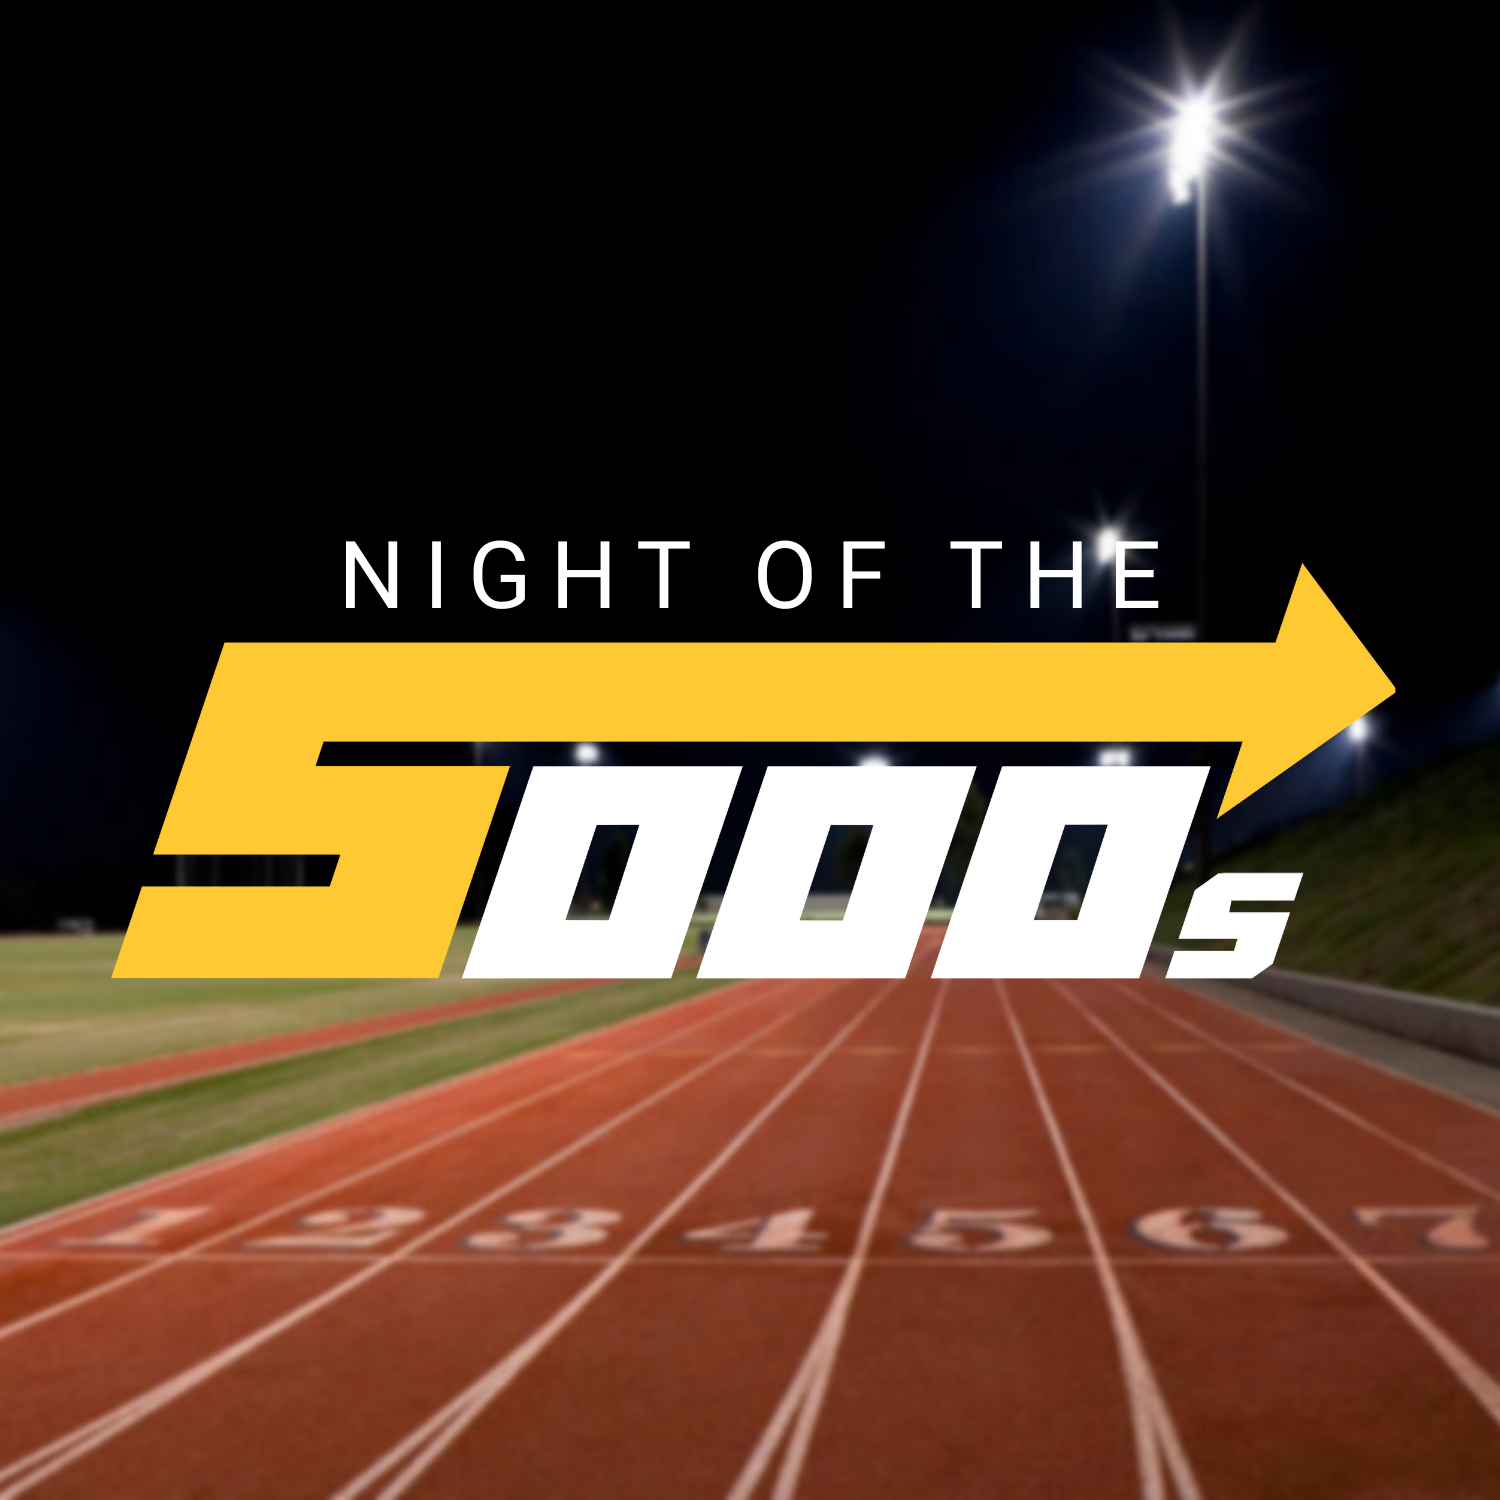 Night of the 5000s